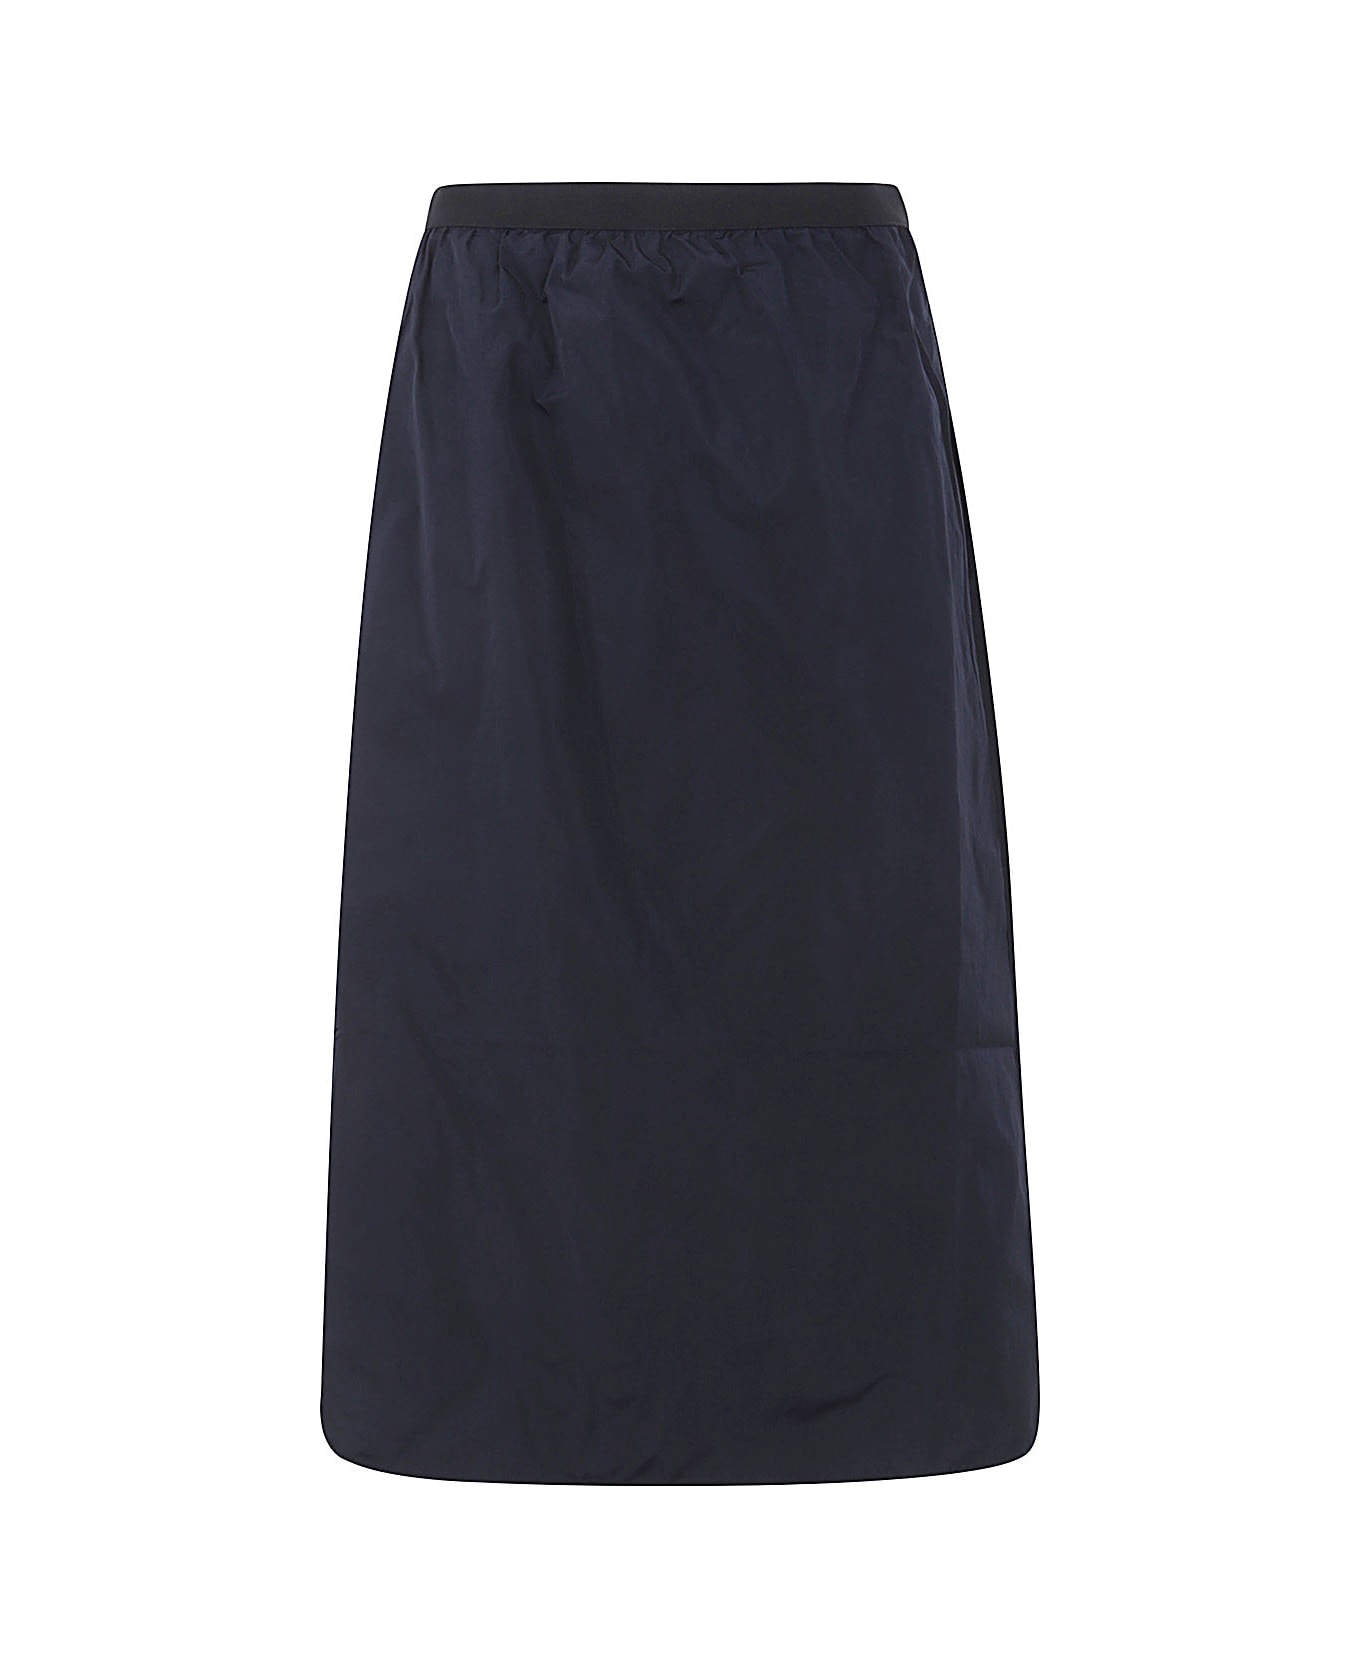 Sofie d'Hoore Pencil Skirt - Midnight スカート